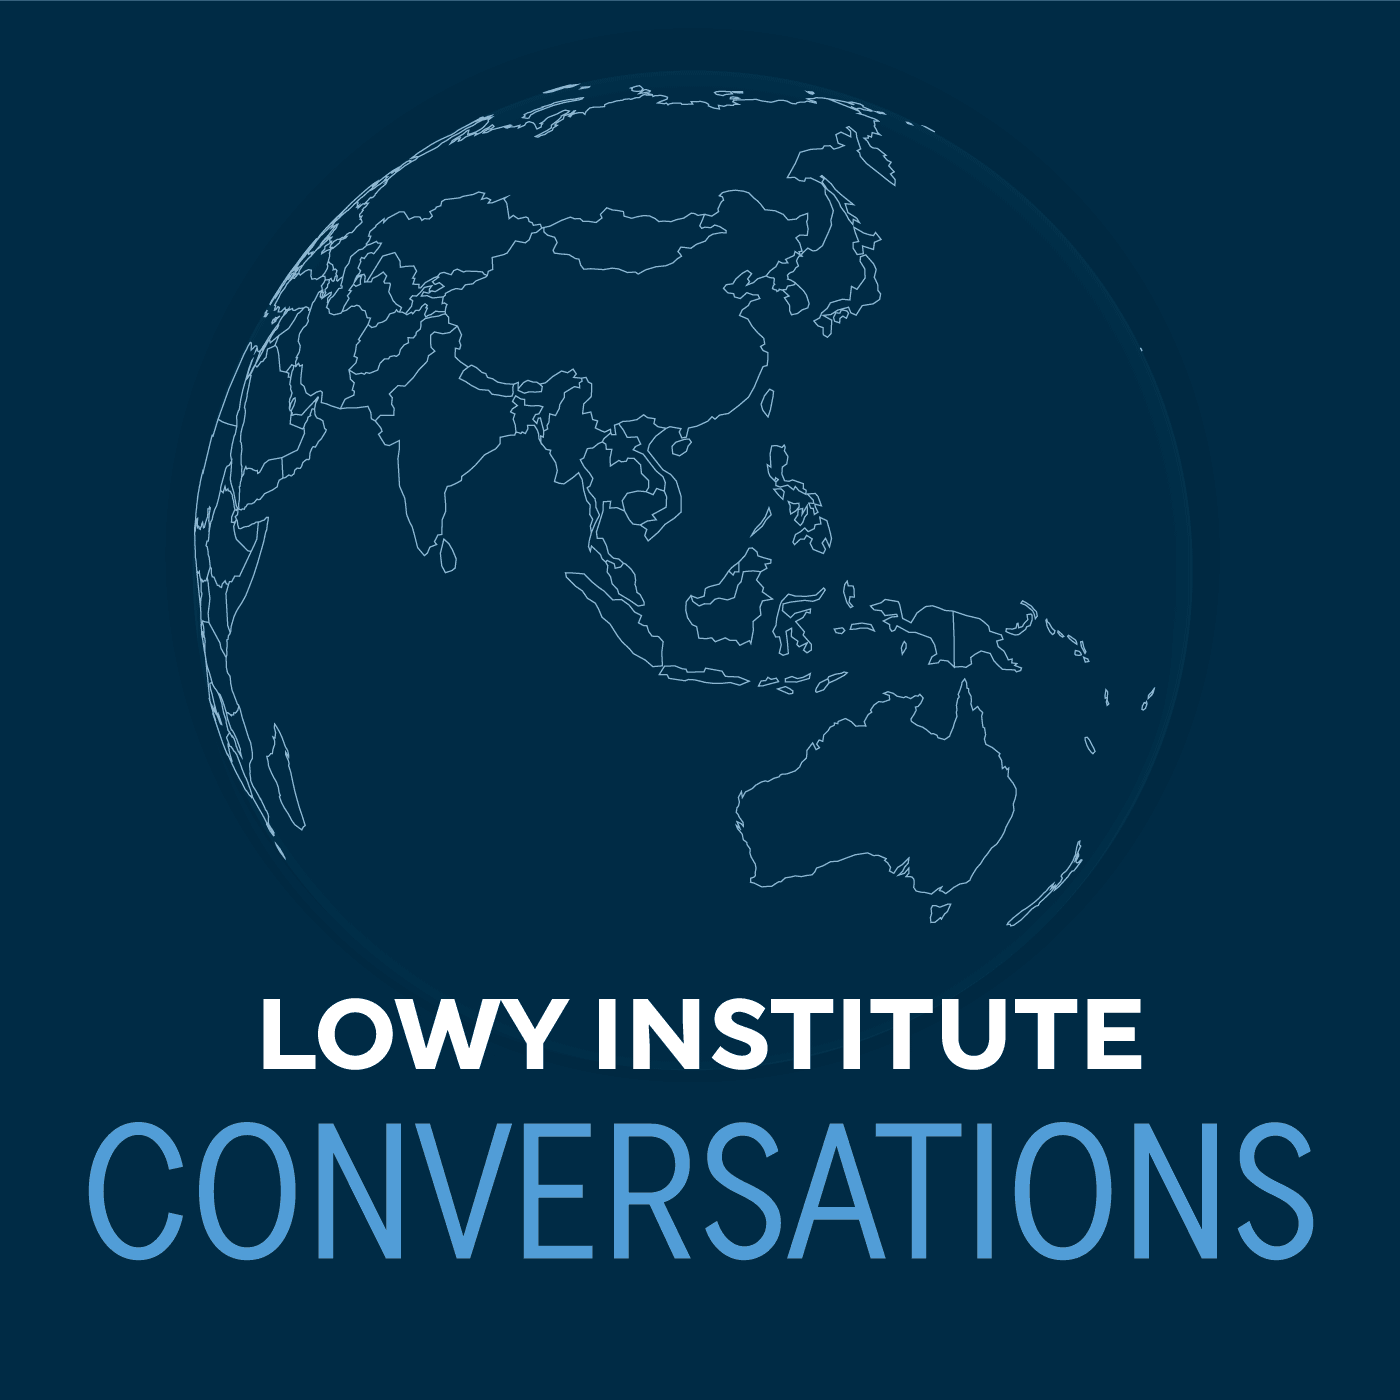 Lowy Institute Conversations